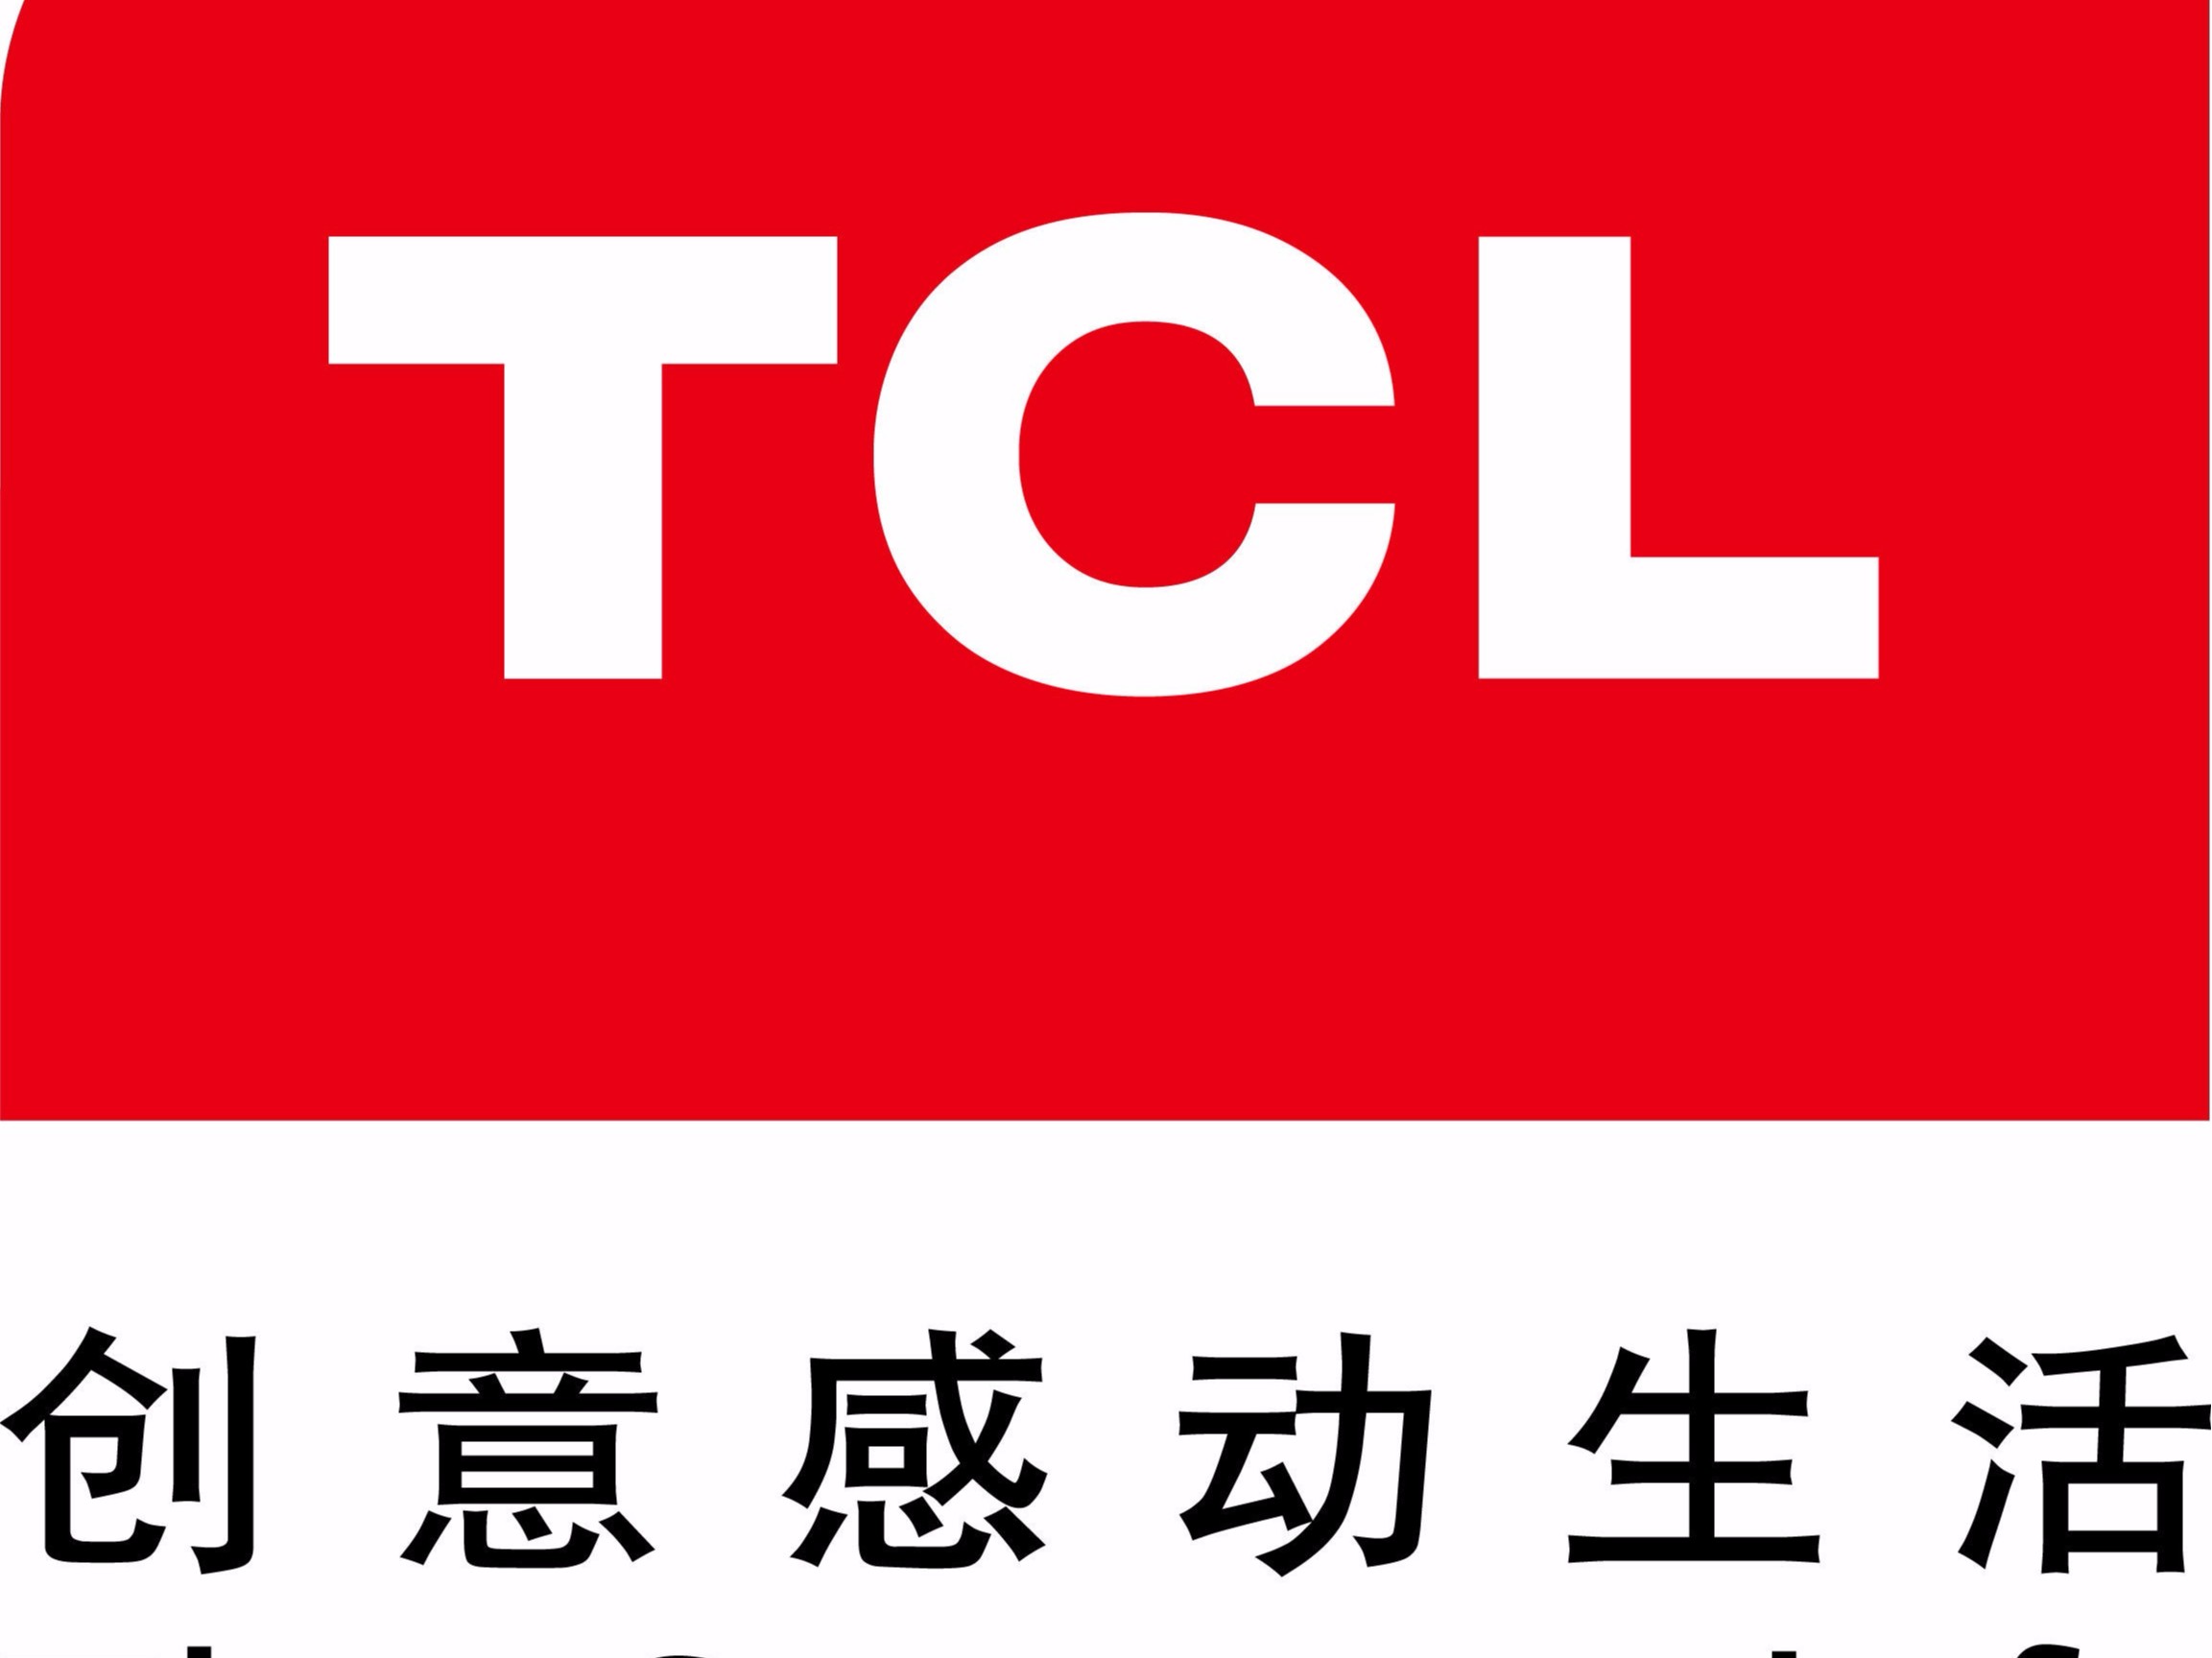 TCL集团，鑫鹰服饰专业的T恤衫生产厂家